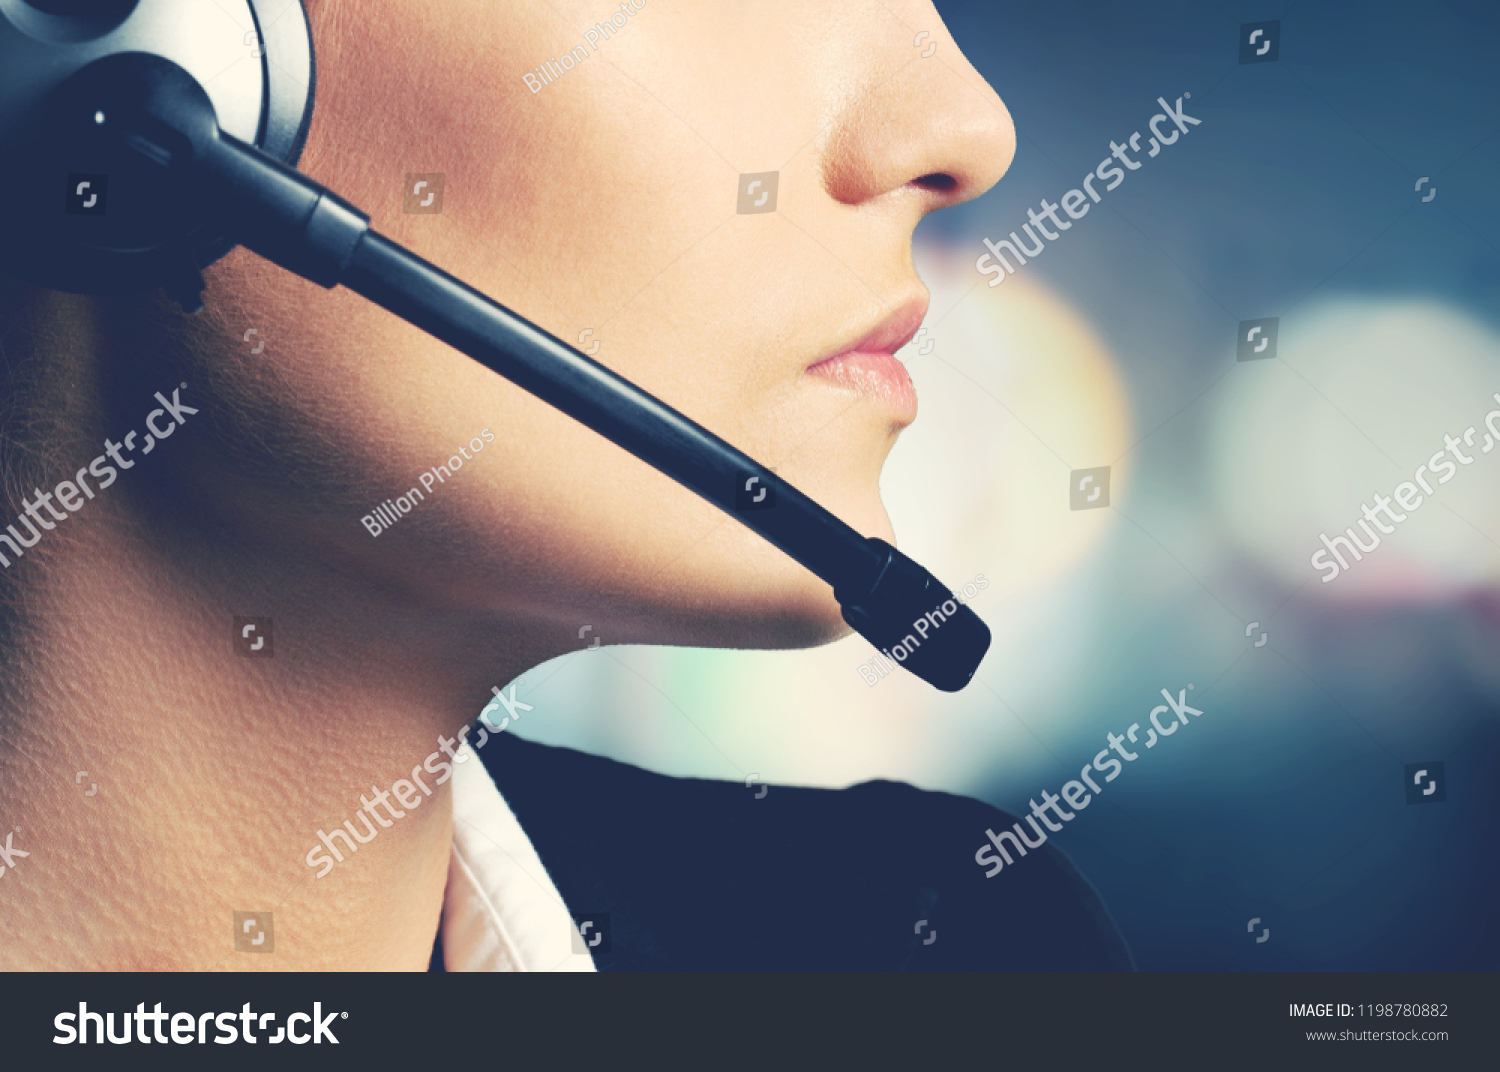 Woman Call Center operator on dark background #1198780882